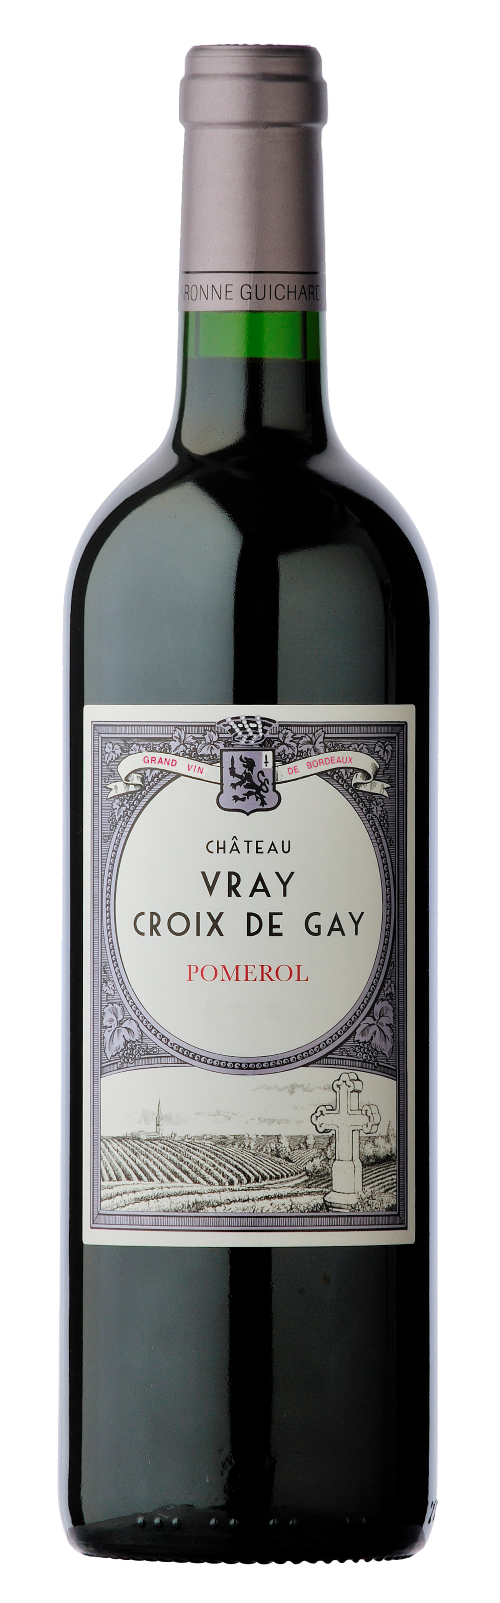 Château Vray Croix de Gay Pomerol 2017